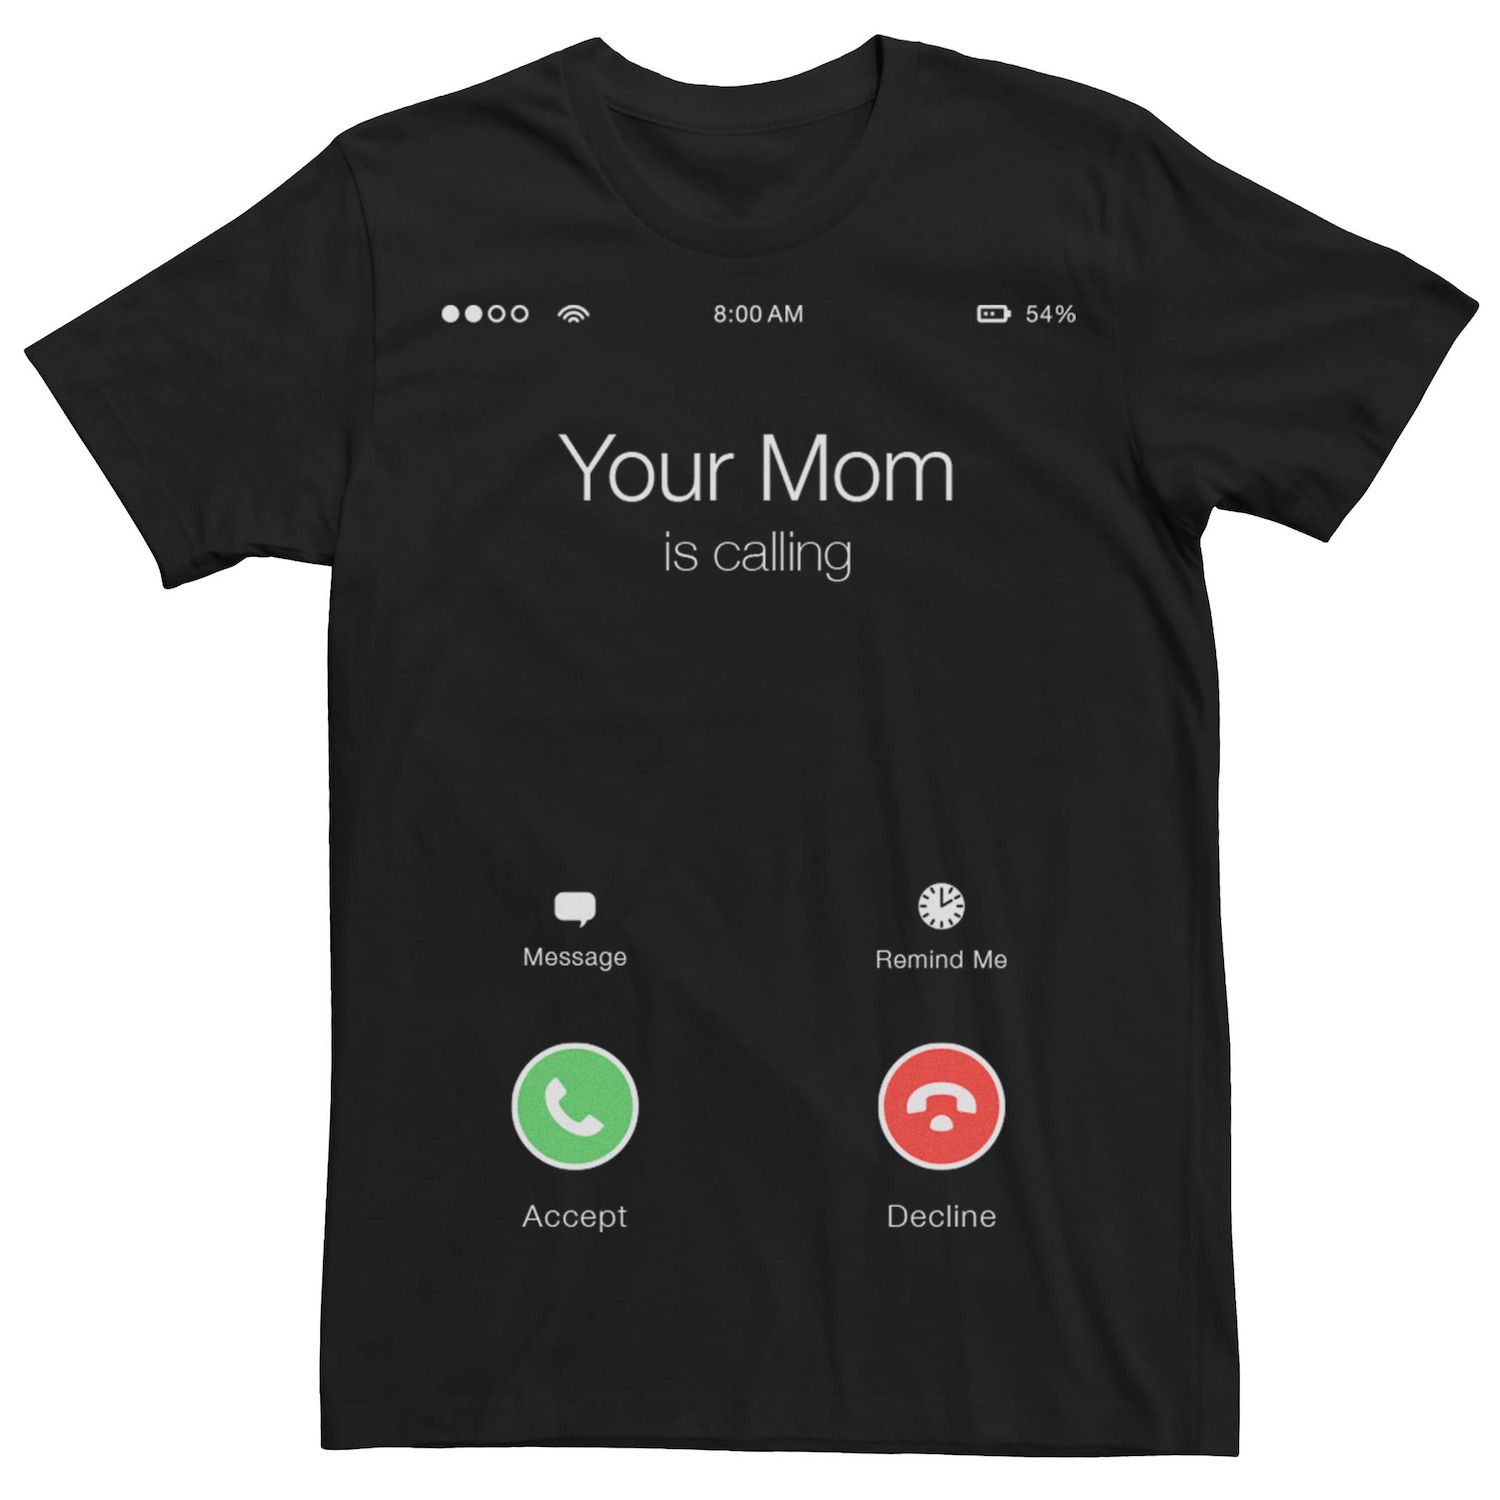 Mom Phone